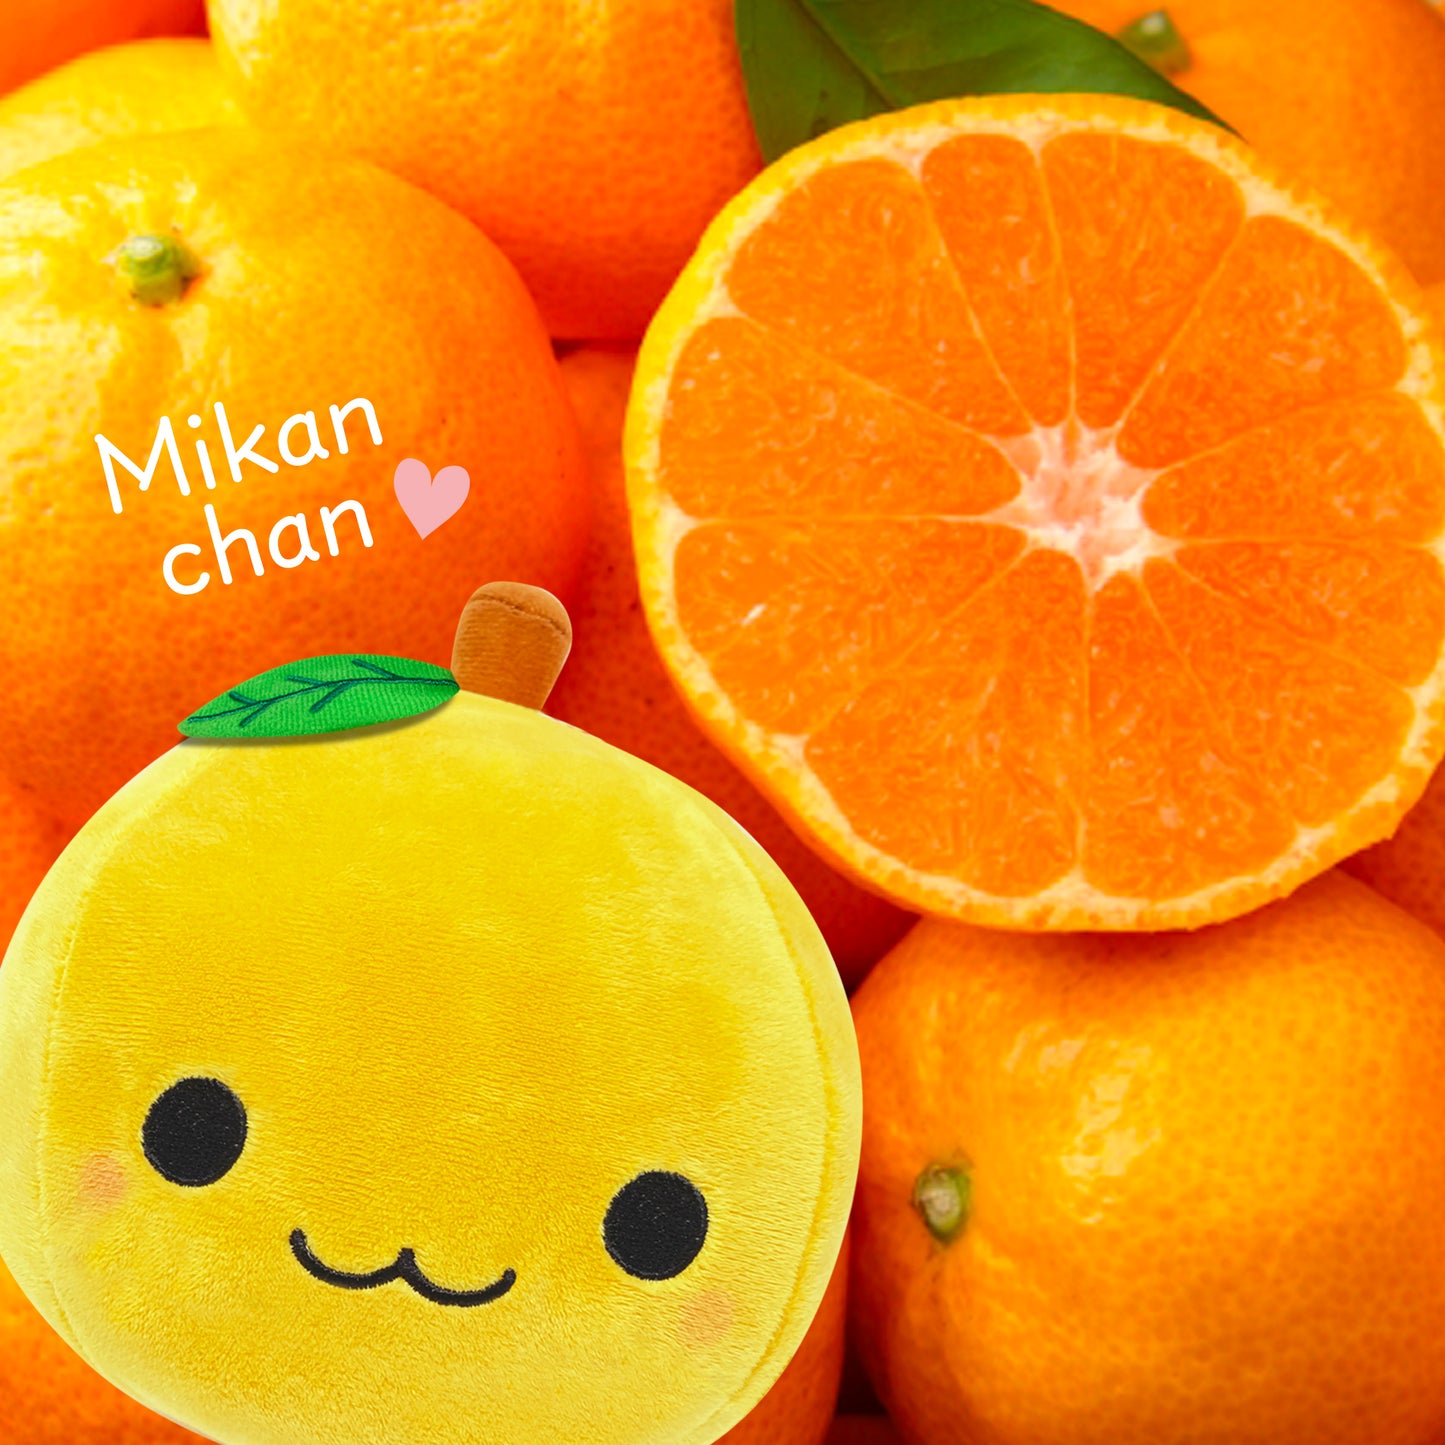 Instagram of Orange Fruit Stuffed Toy Mikanchan Yellow